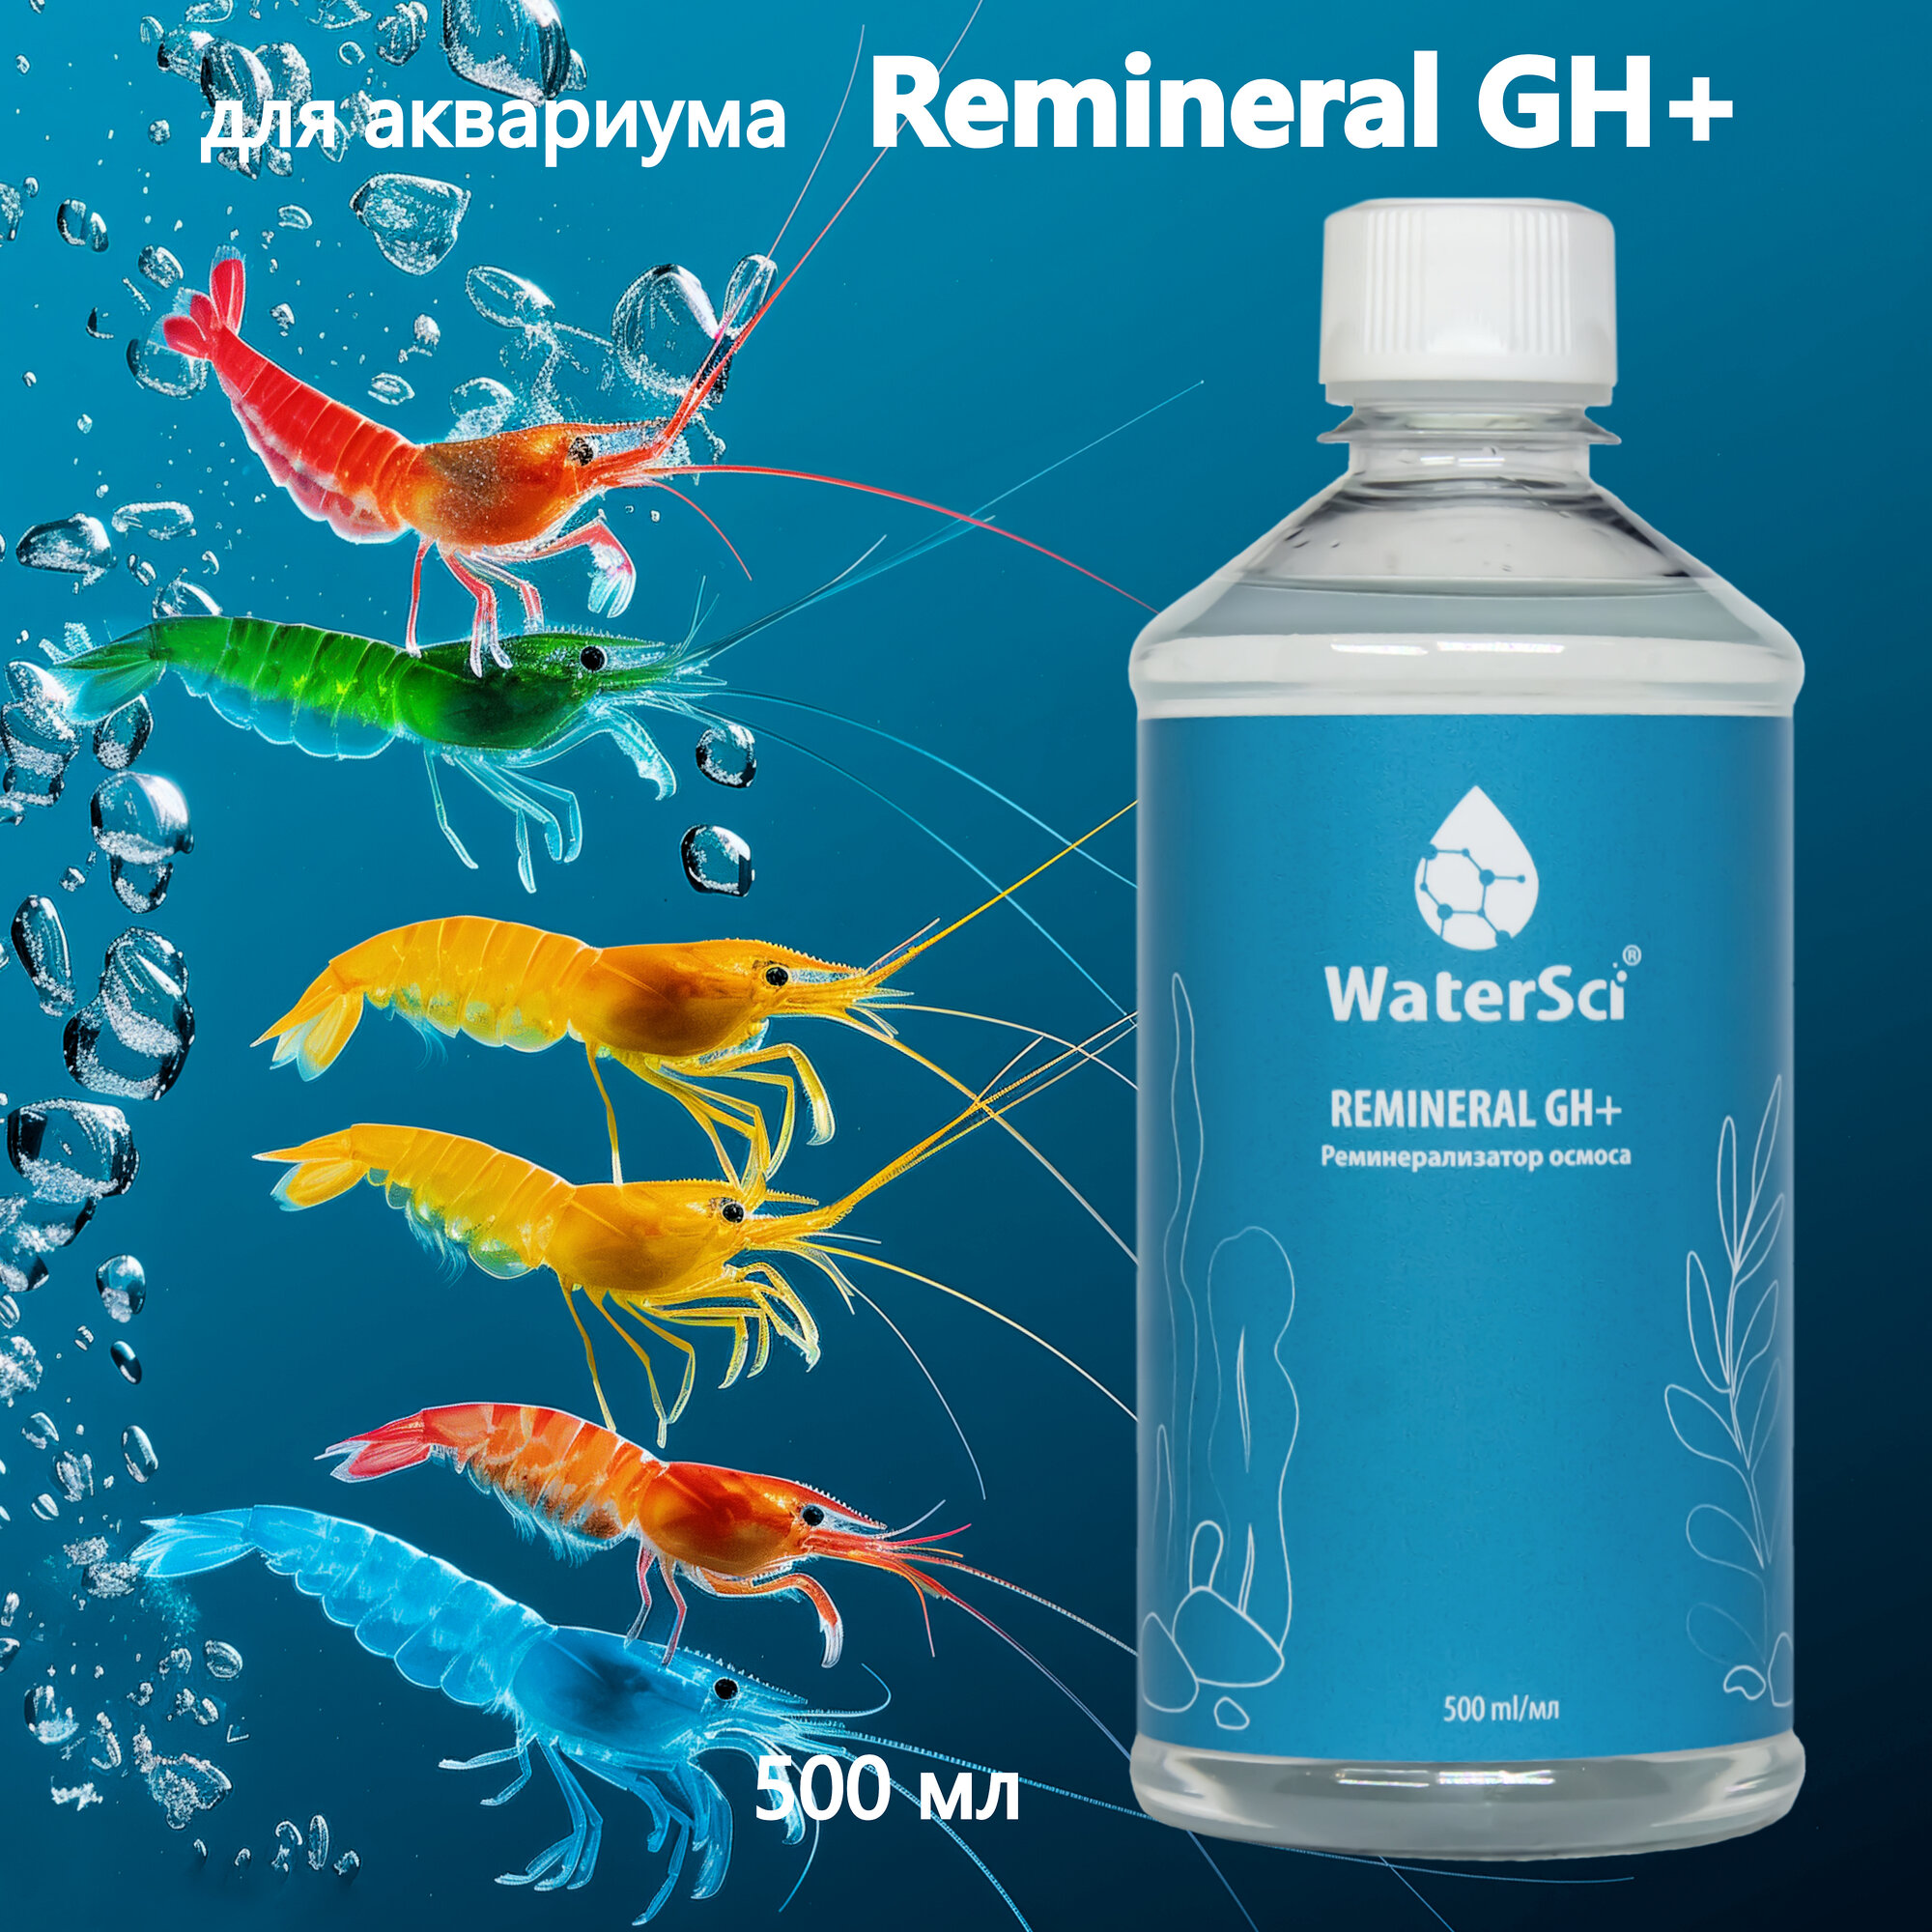 Реминерализатор осмоса Water Sci. GH+ Remineral, 500 мл.